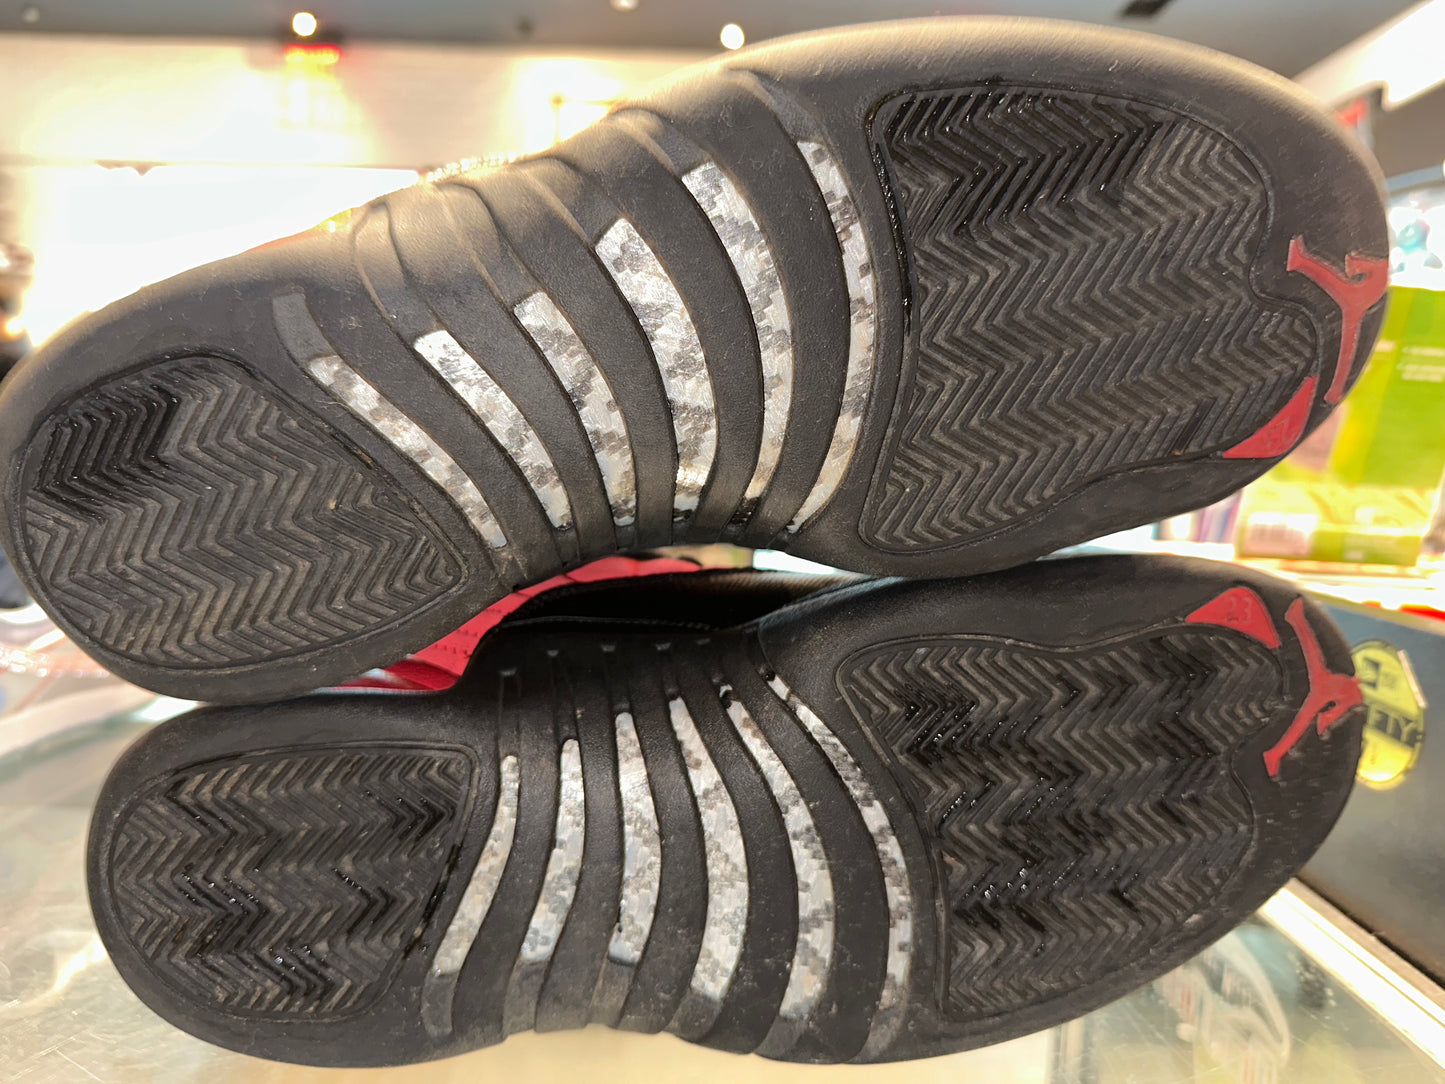 Size 12 Air Jordan 2 “Reverse Flu Game” (Mall)